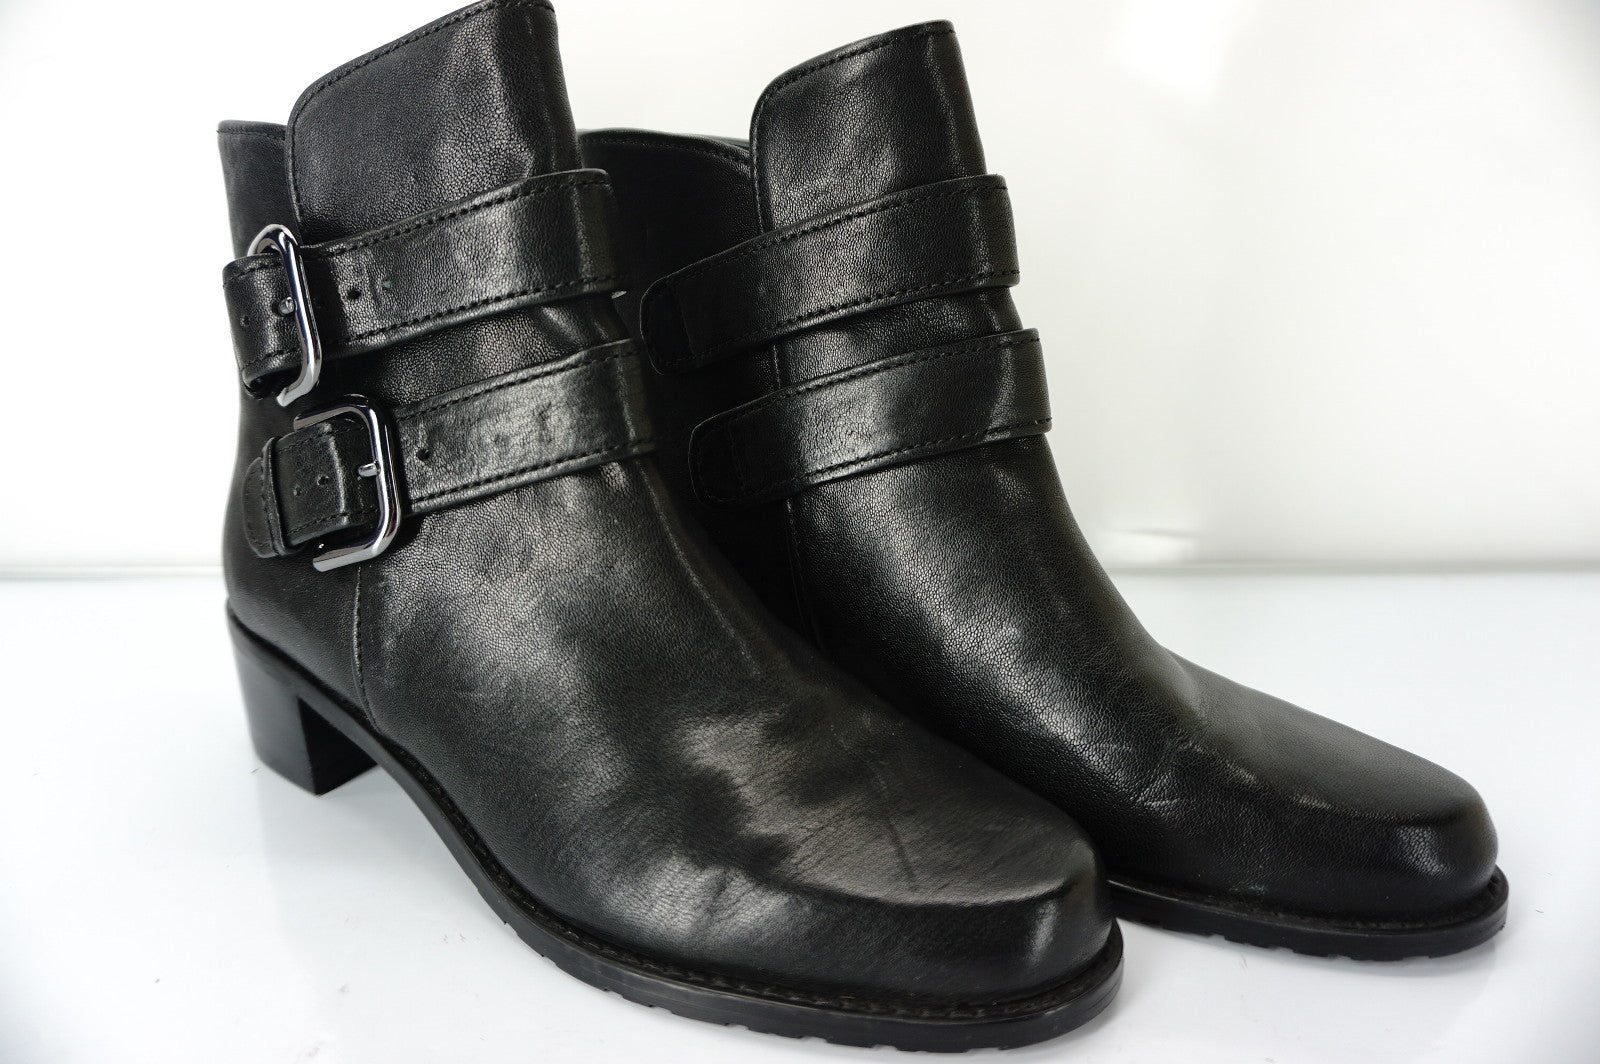 Stuart Weitzman black leather Strapduo Biker Ankle Boots Size 5.5 Women's $475